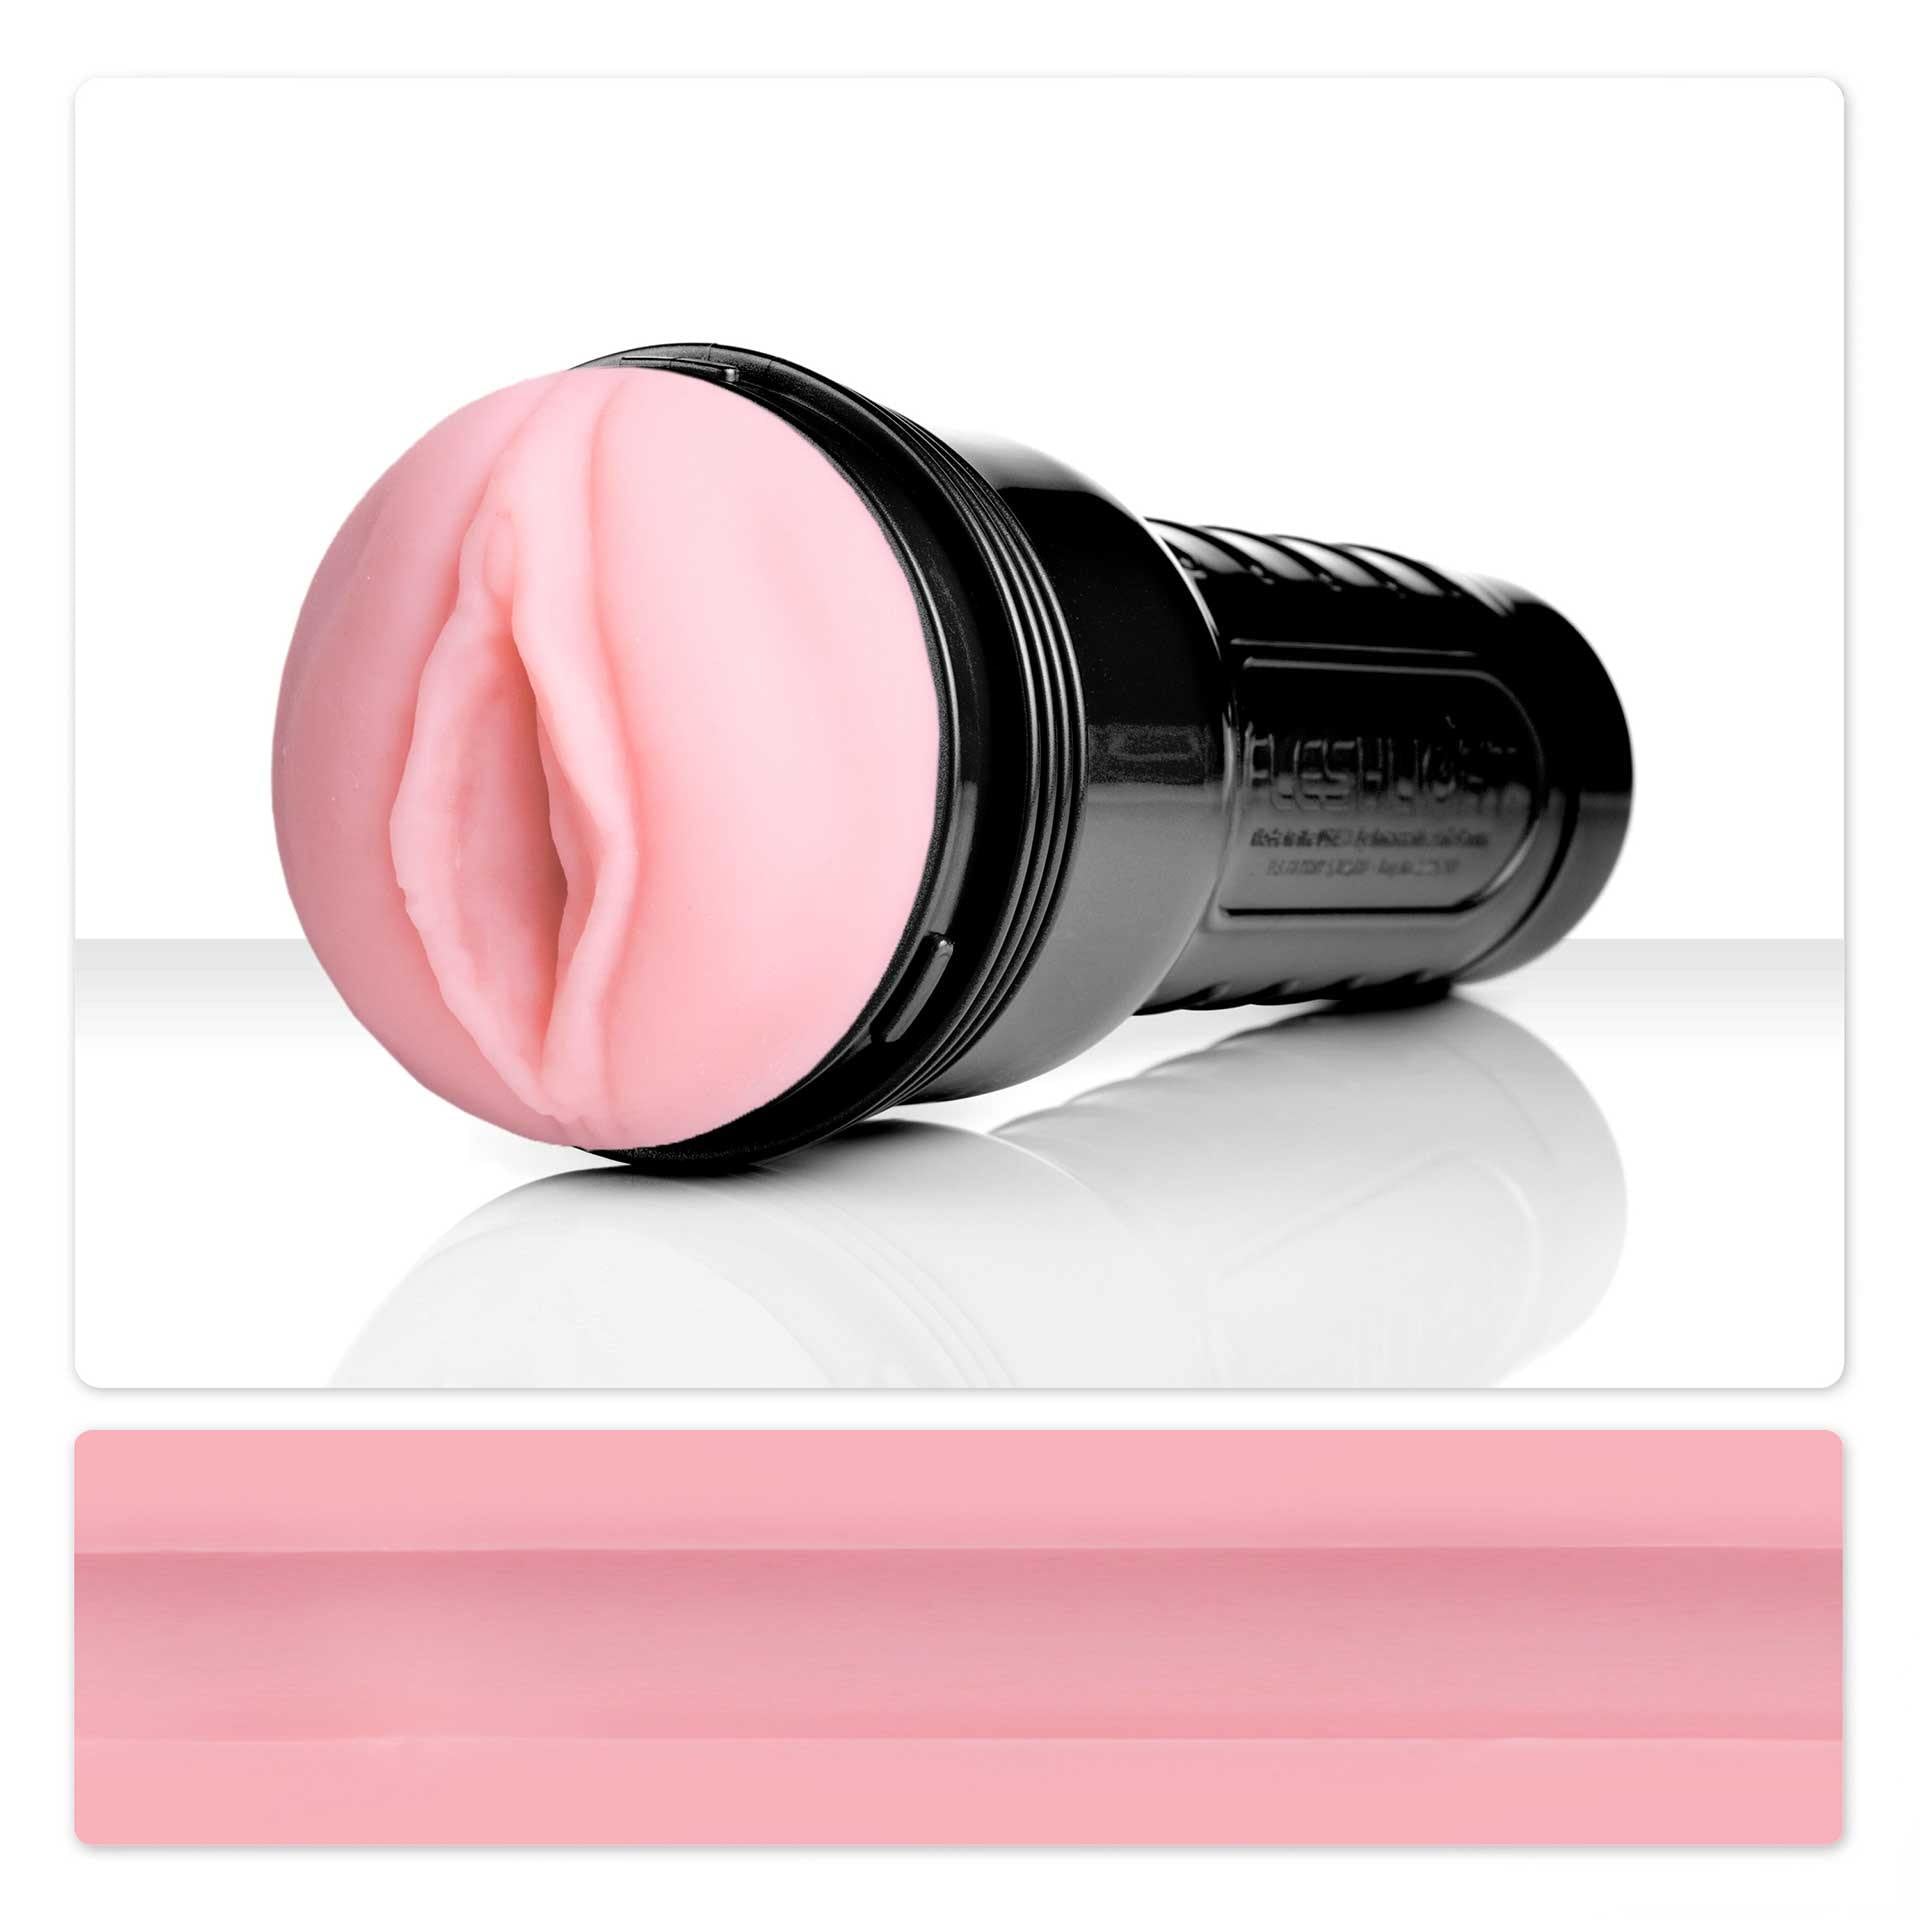 Fleshlight Pink Lady Original - Buy At Luxury Toy X - Free 3-Day Shipping